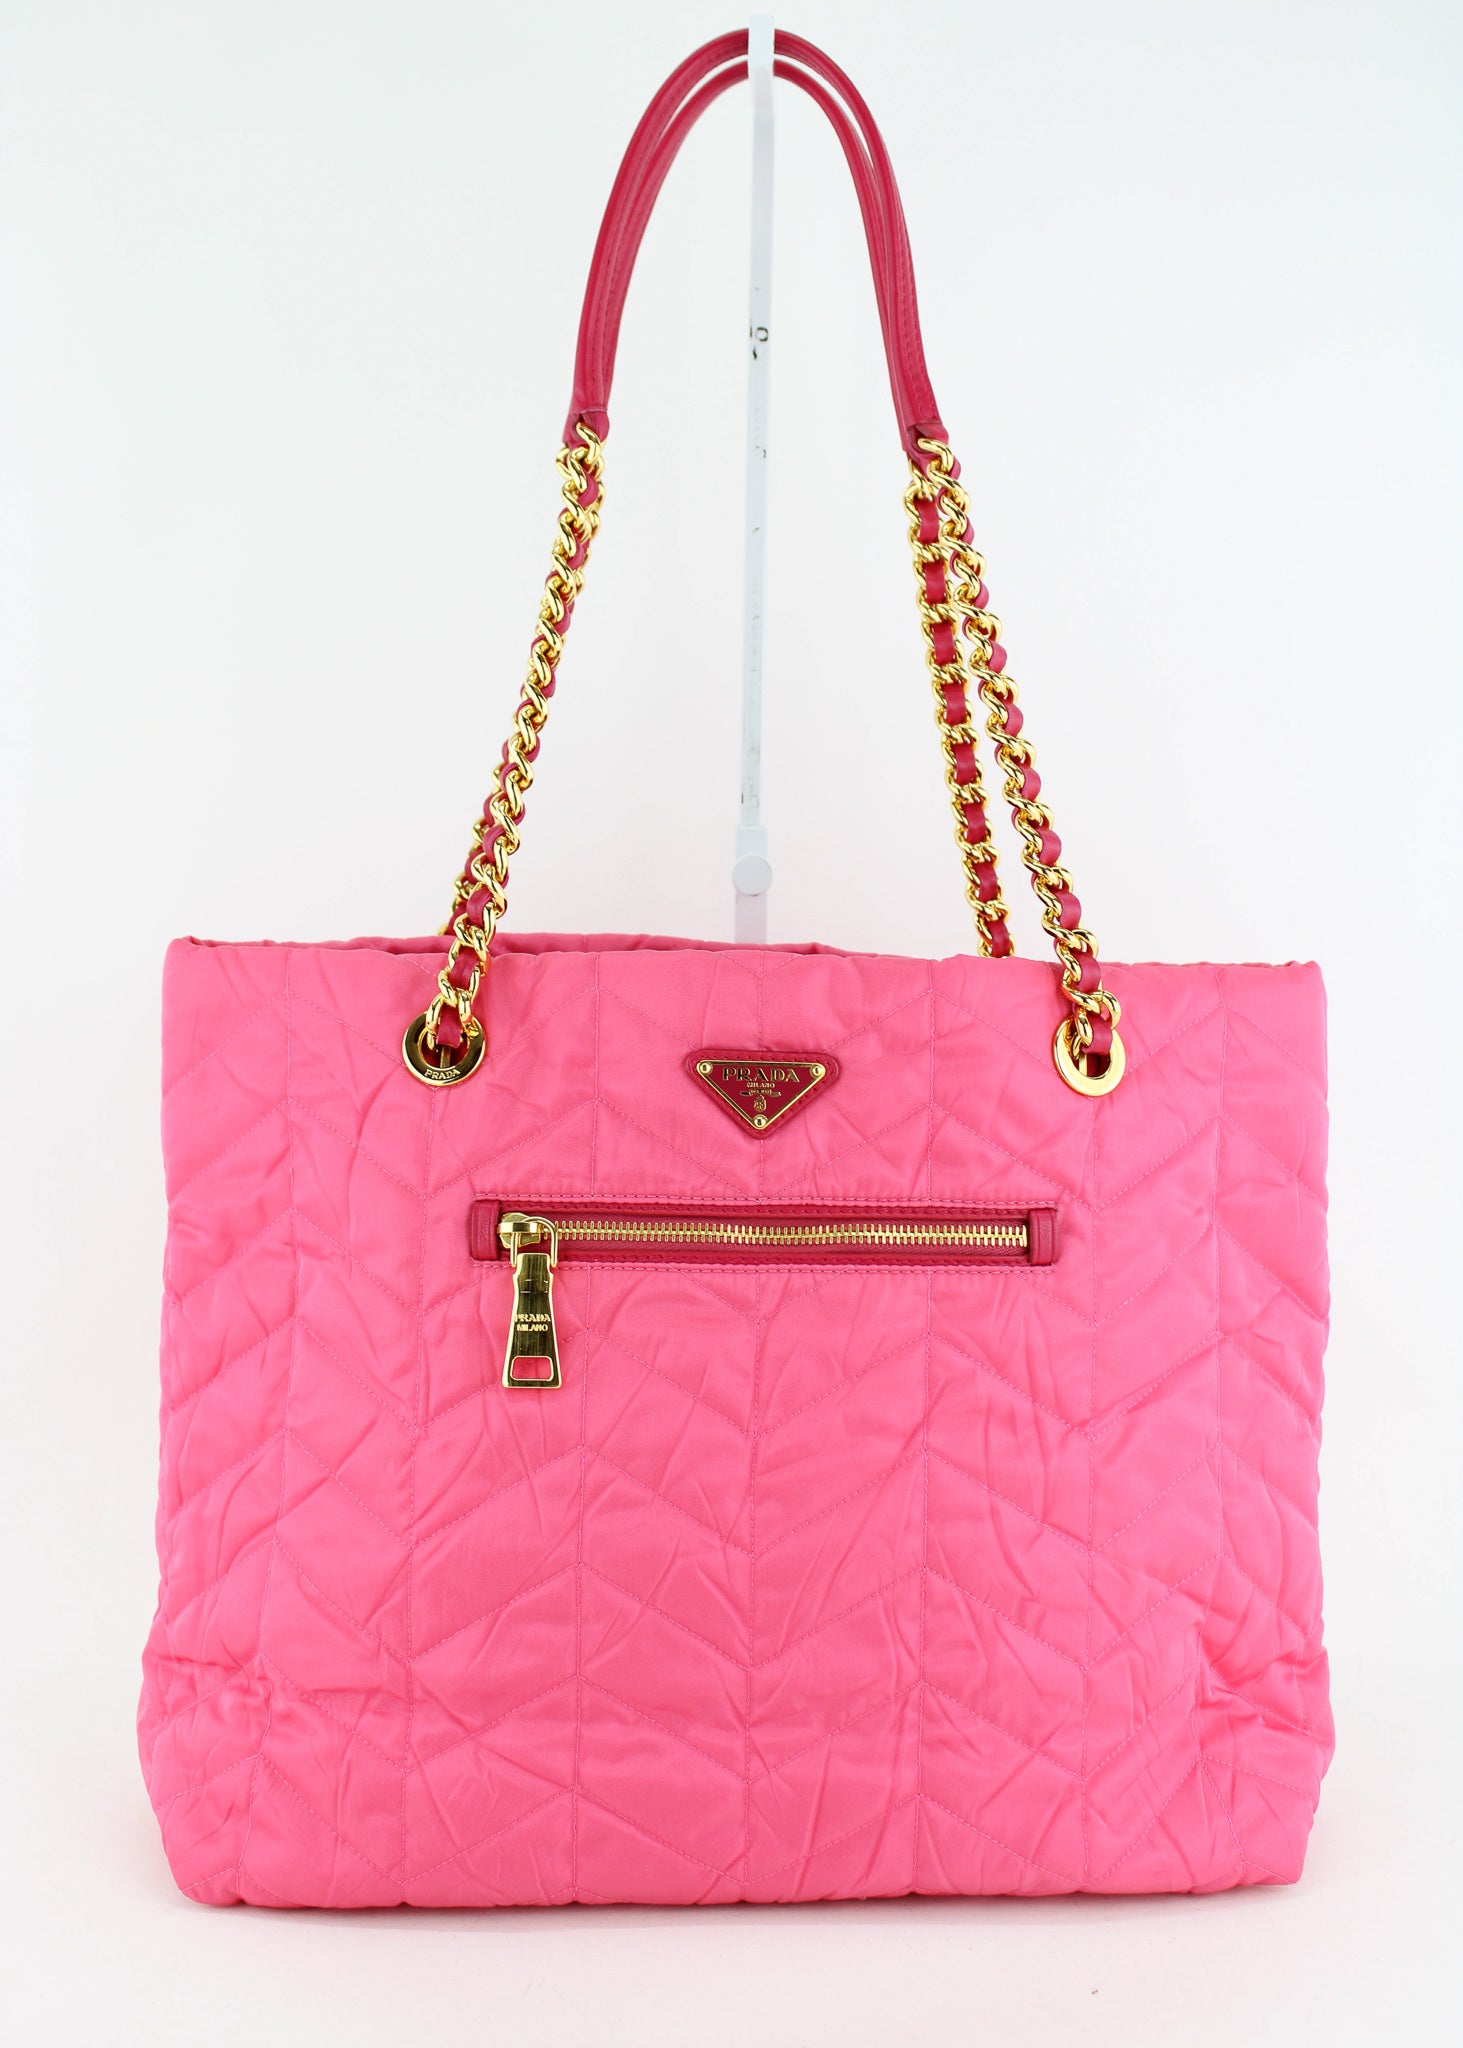 Prada - Authenticated Handbag - Leather Multicolour for Women, Very Good Condition